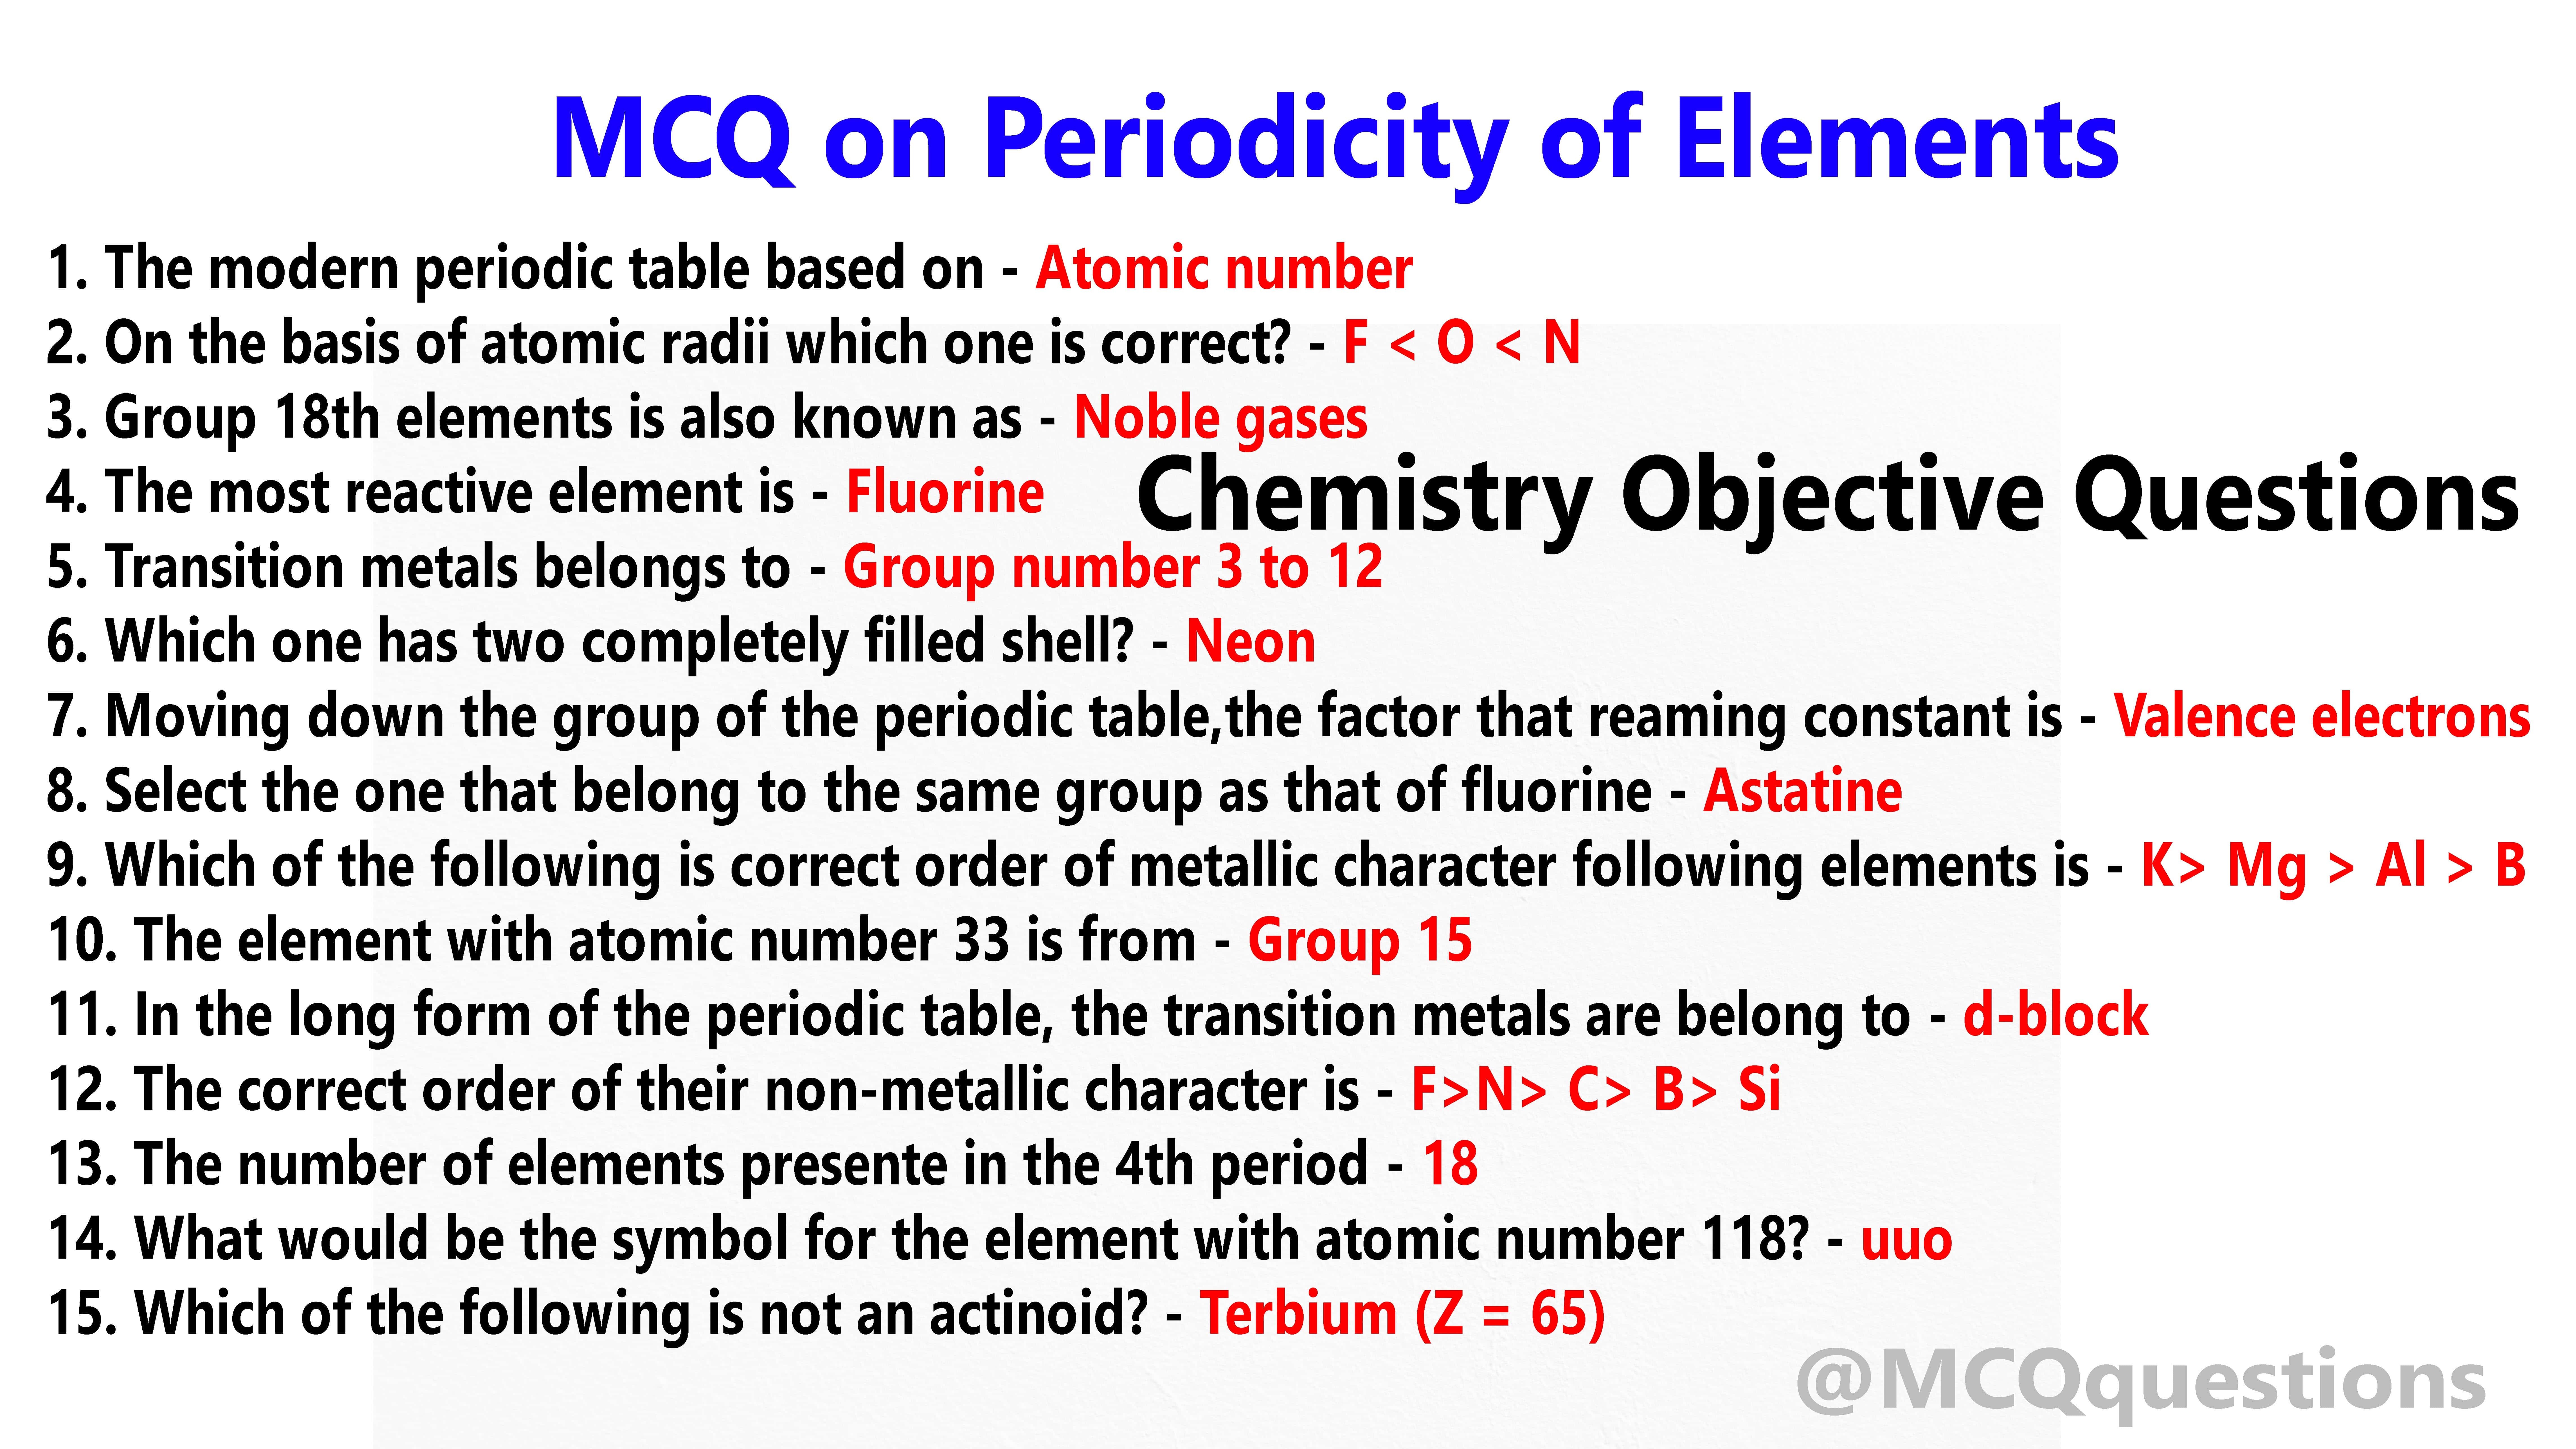 Inorganic Chemistry MCQ on Periodicity of Elements